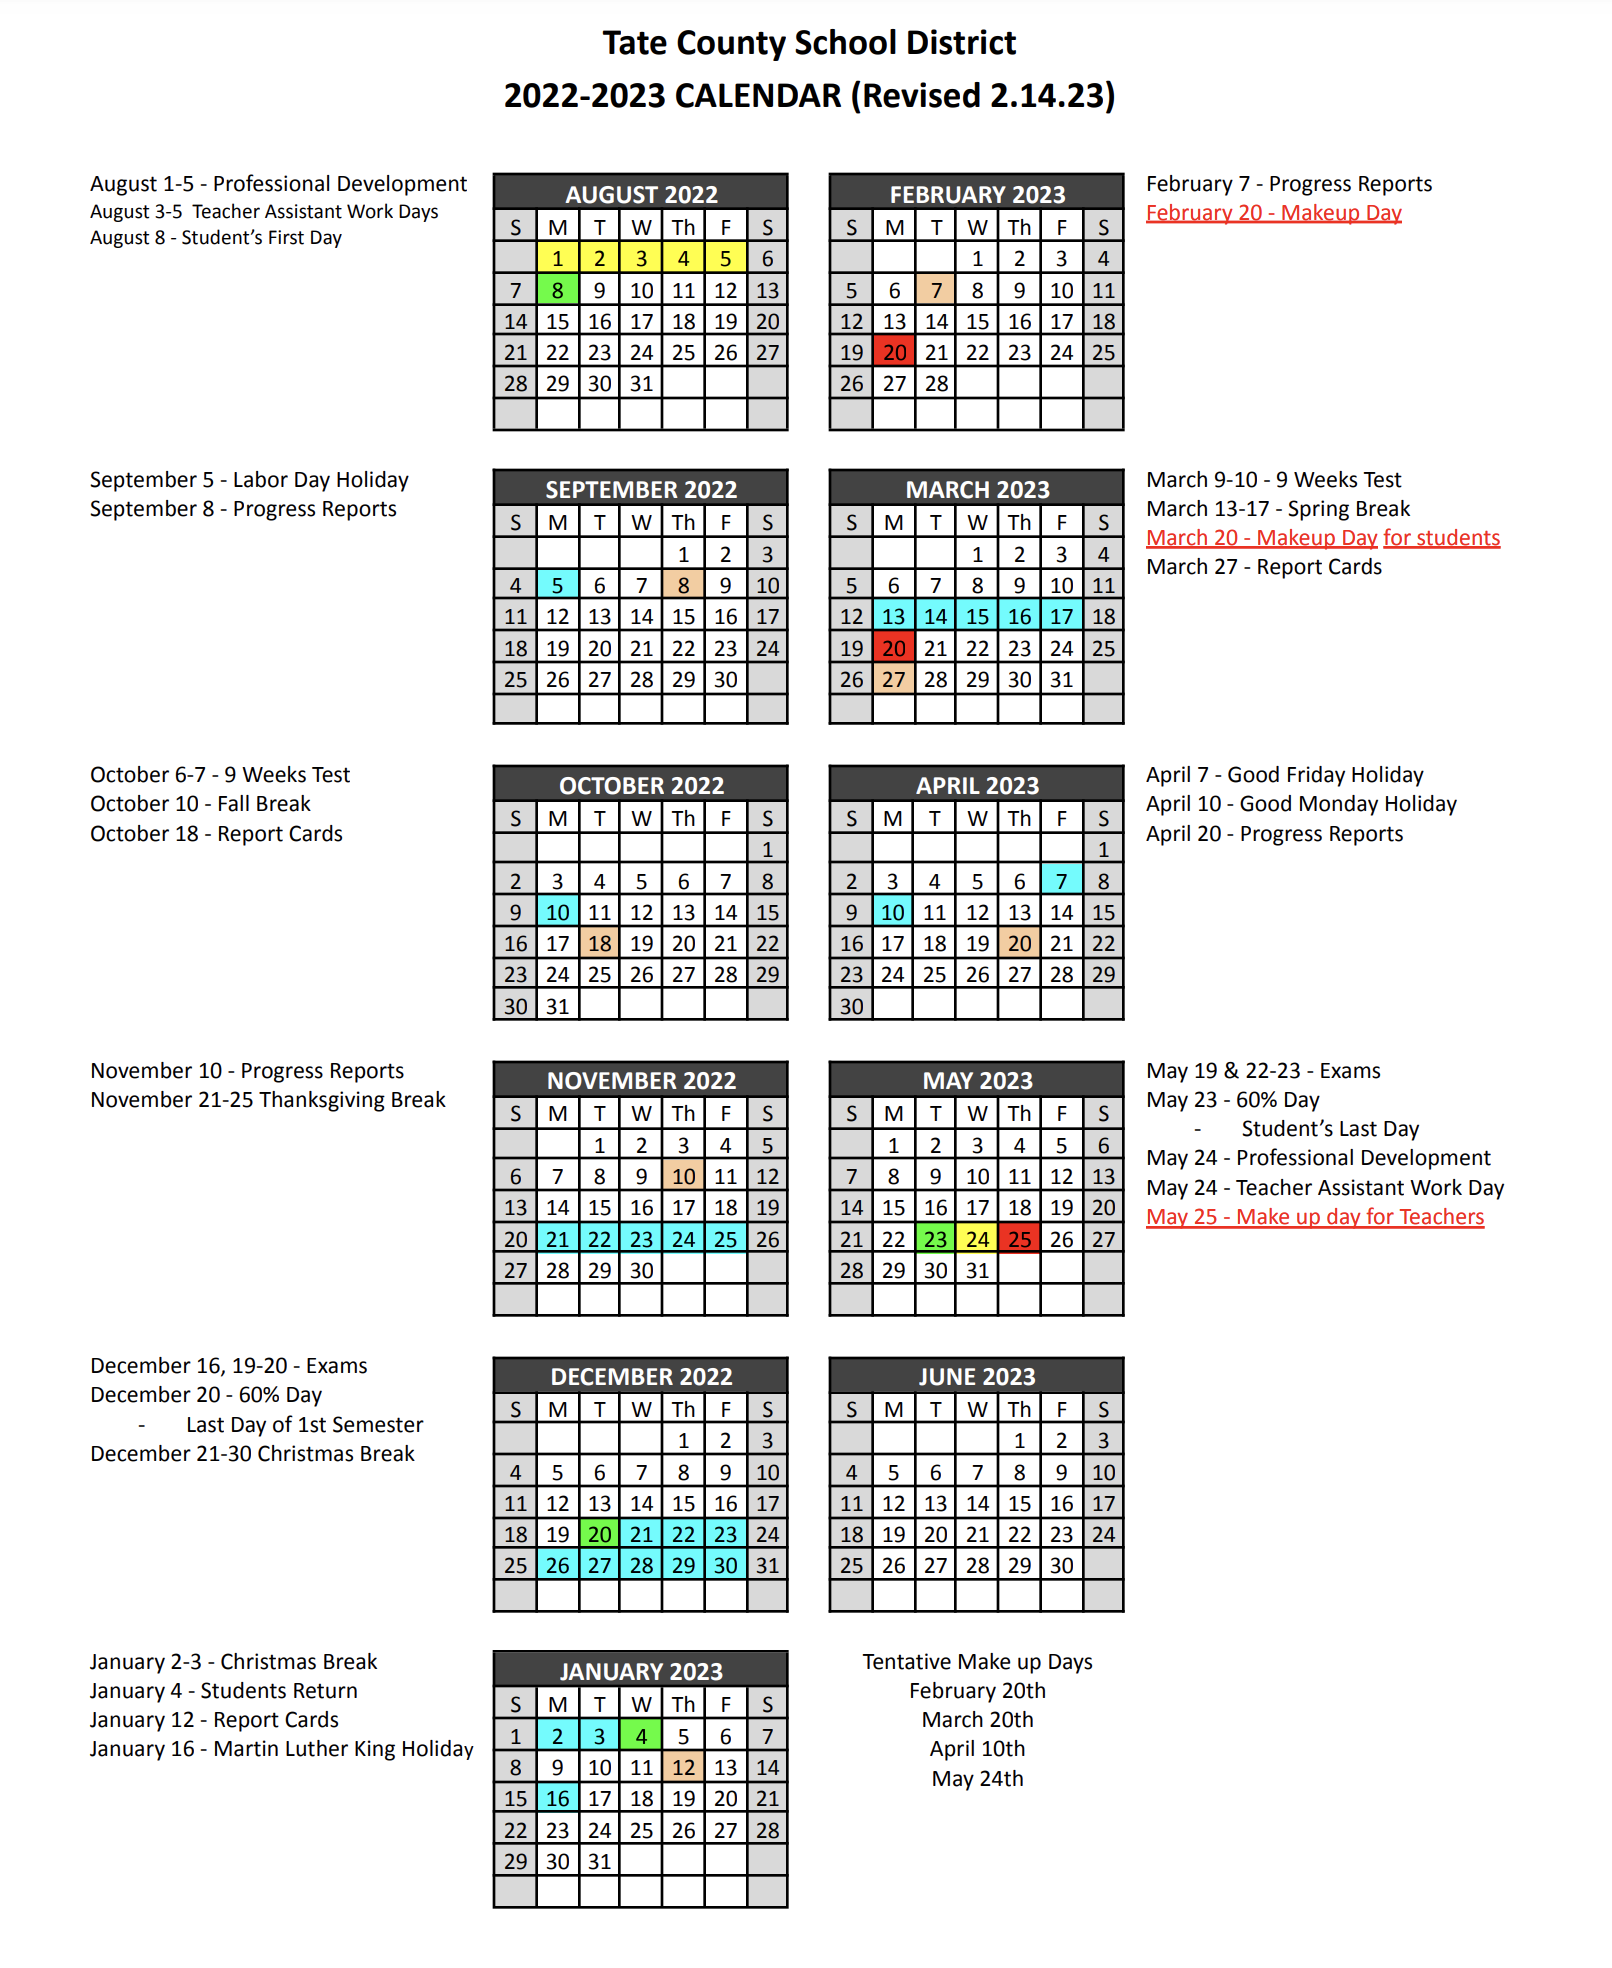 2022-2023 Revised Calendar